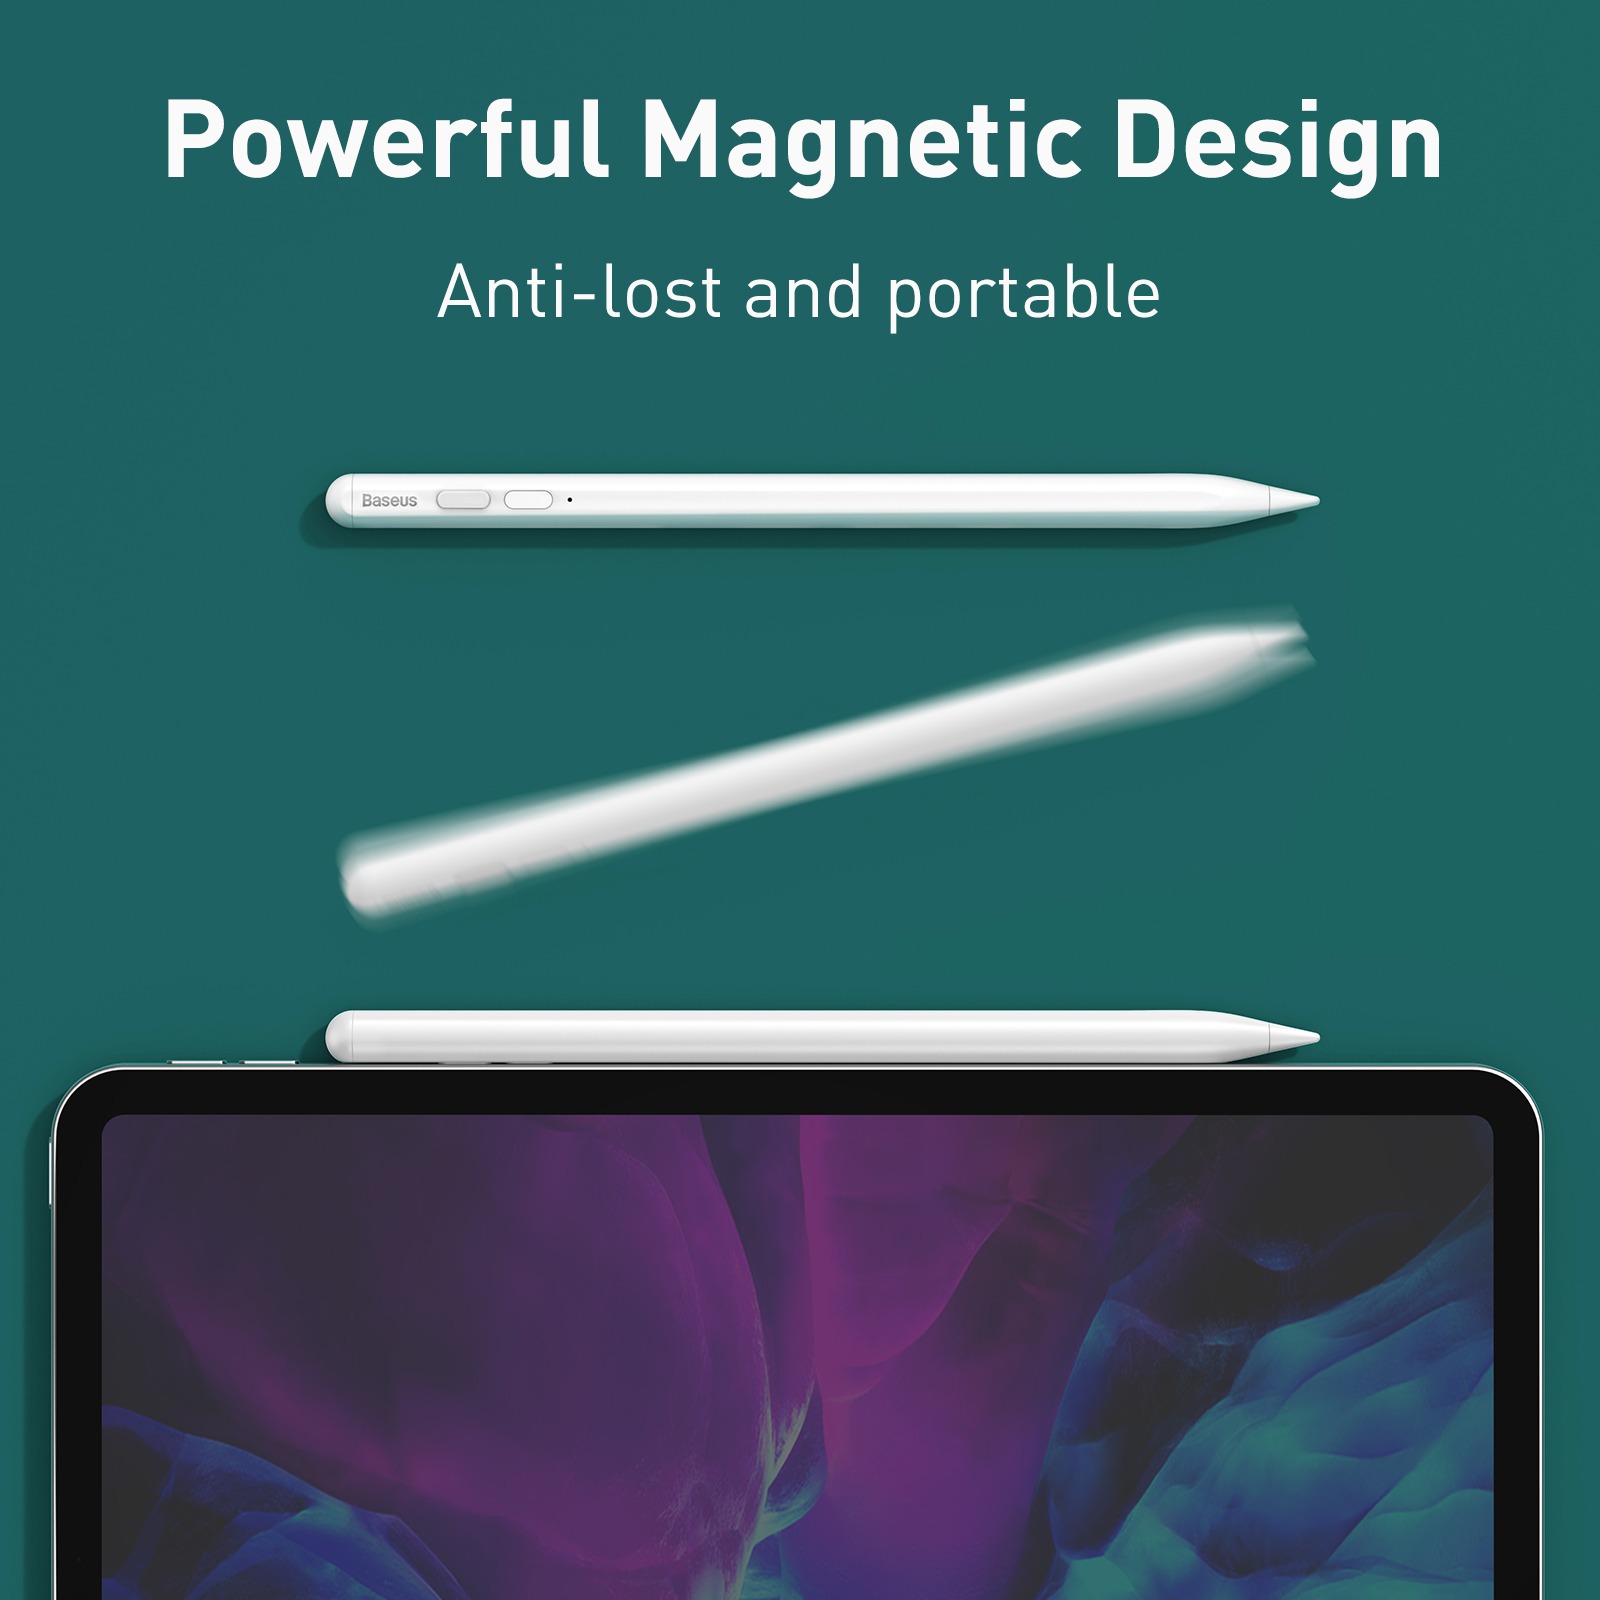 Bút cảm ứng Baseus Smooth Writing Capacitive Stylus dùng cho iPad Pro/ Smartphone/ Tablet Android (Active + Passive Version, Magnetic Adsorption, Tilt & Strength sensitive) - Hàng chính hãng